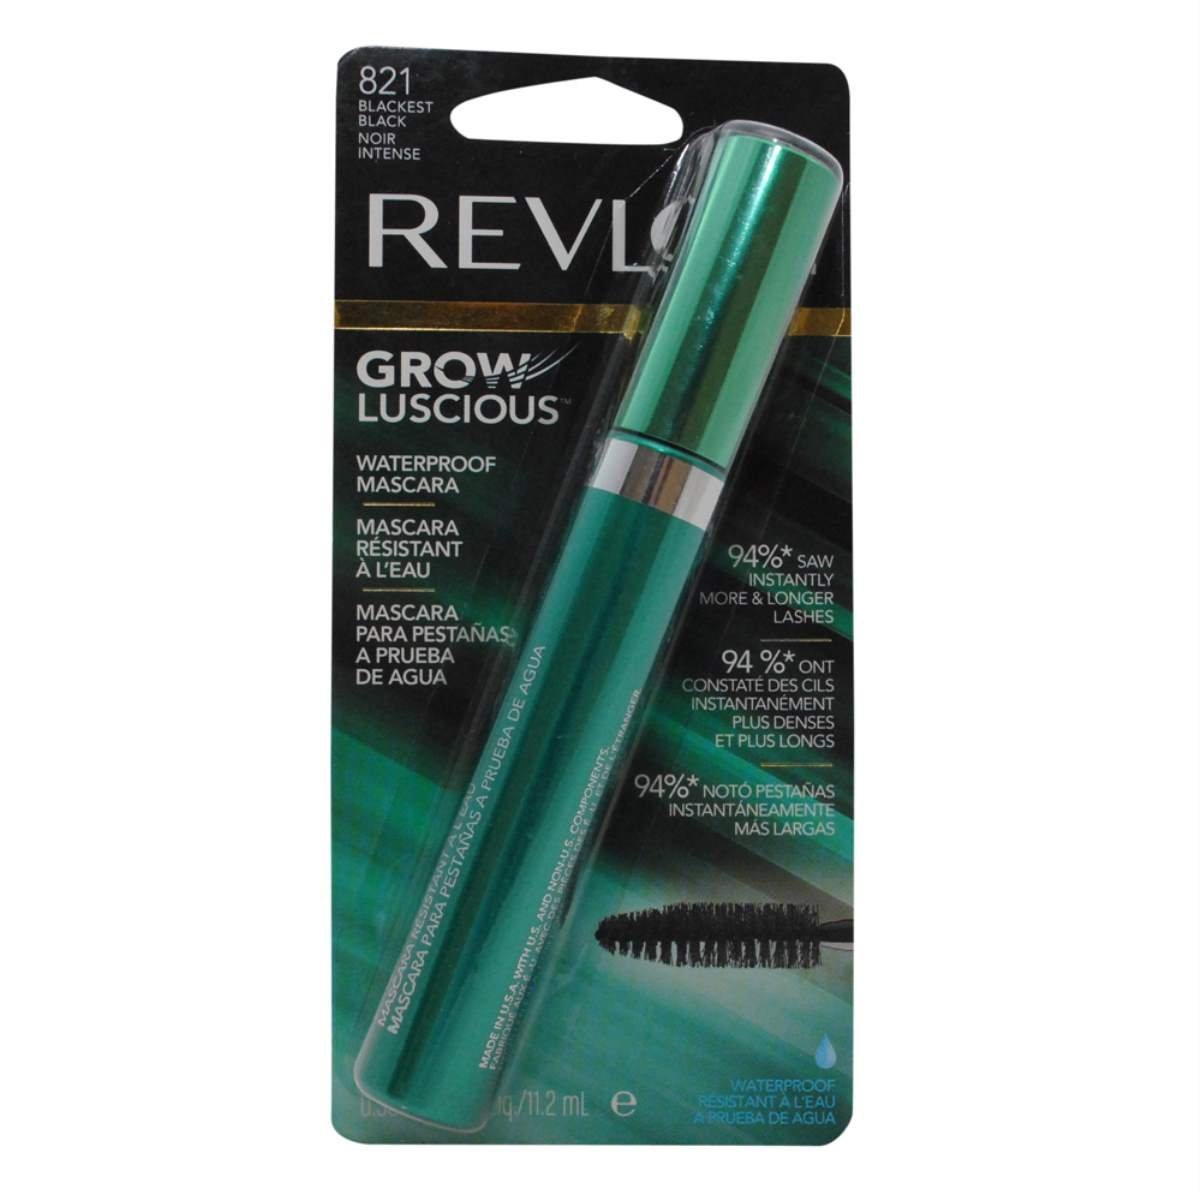 Revlon Grow Luscious by Fabulash Waterproof Mascara - image 1 of 2